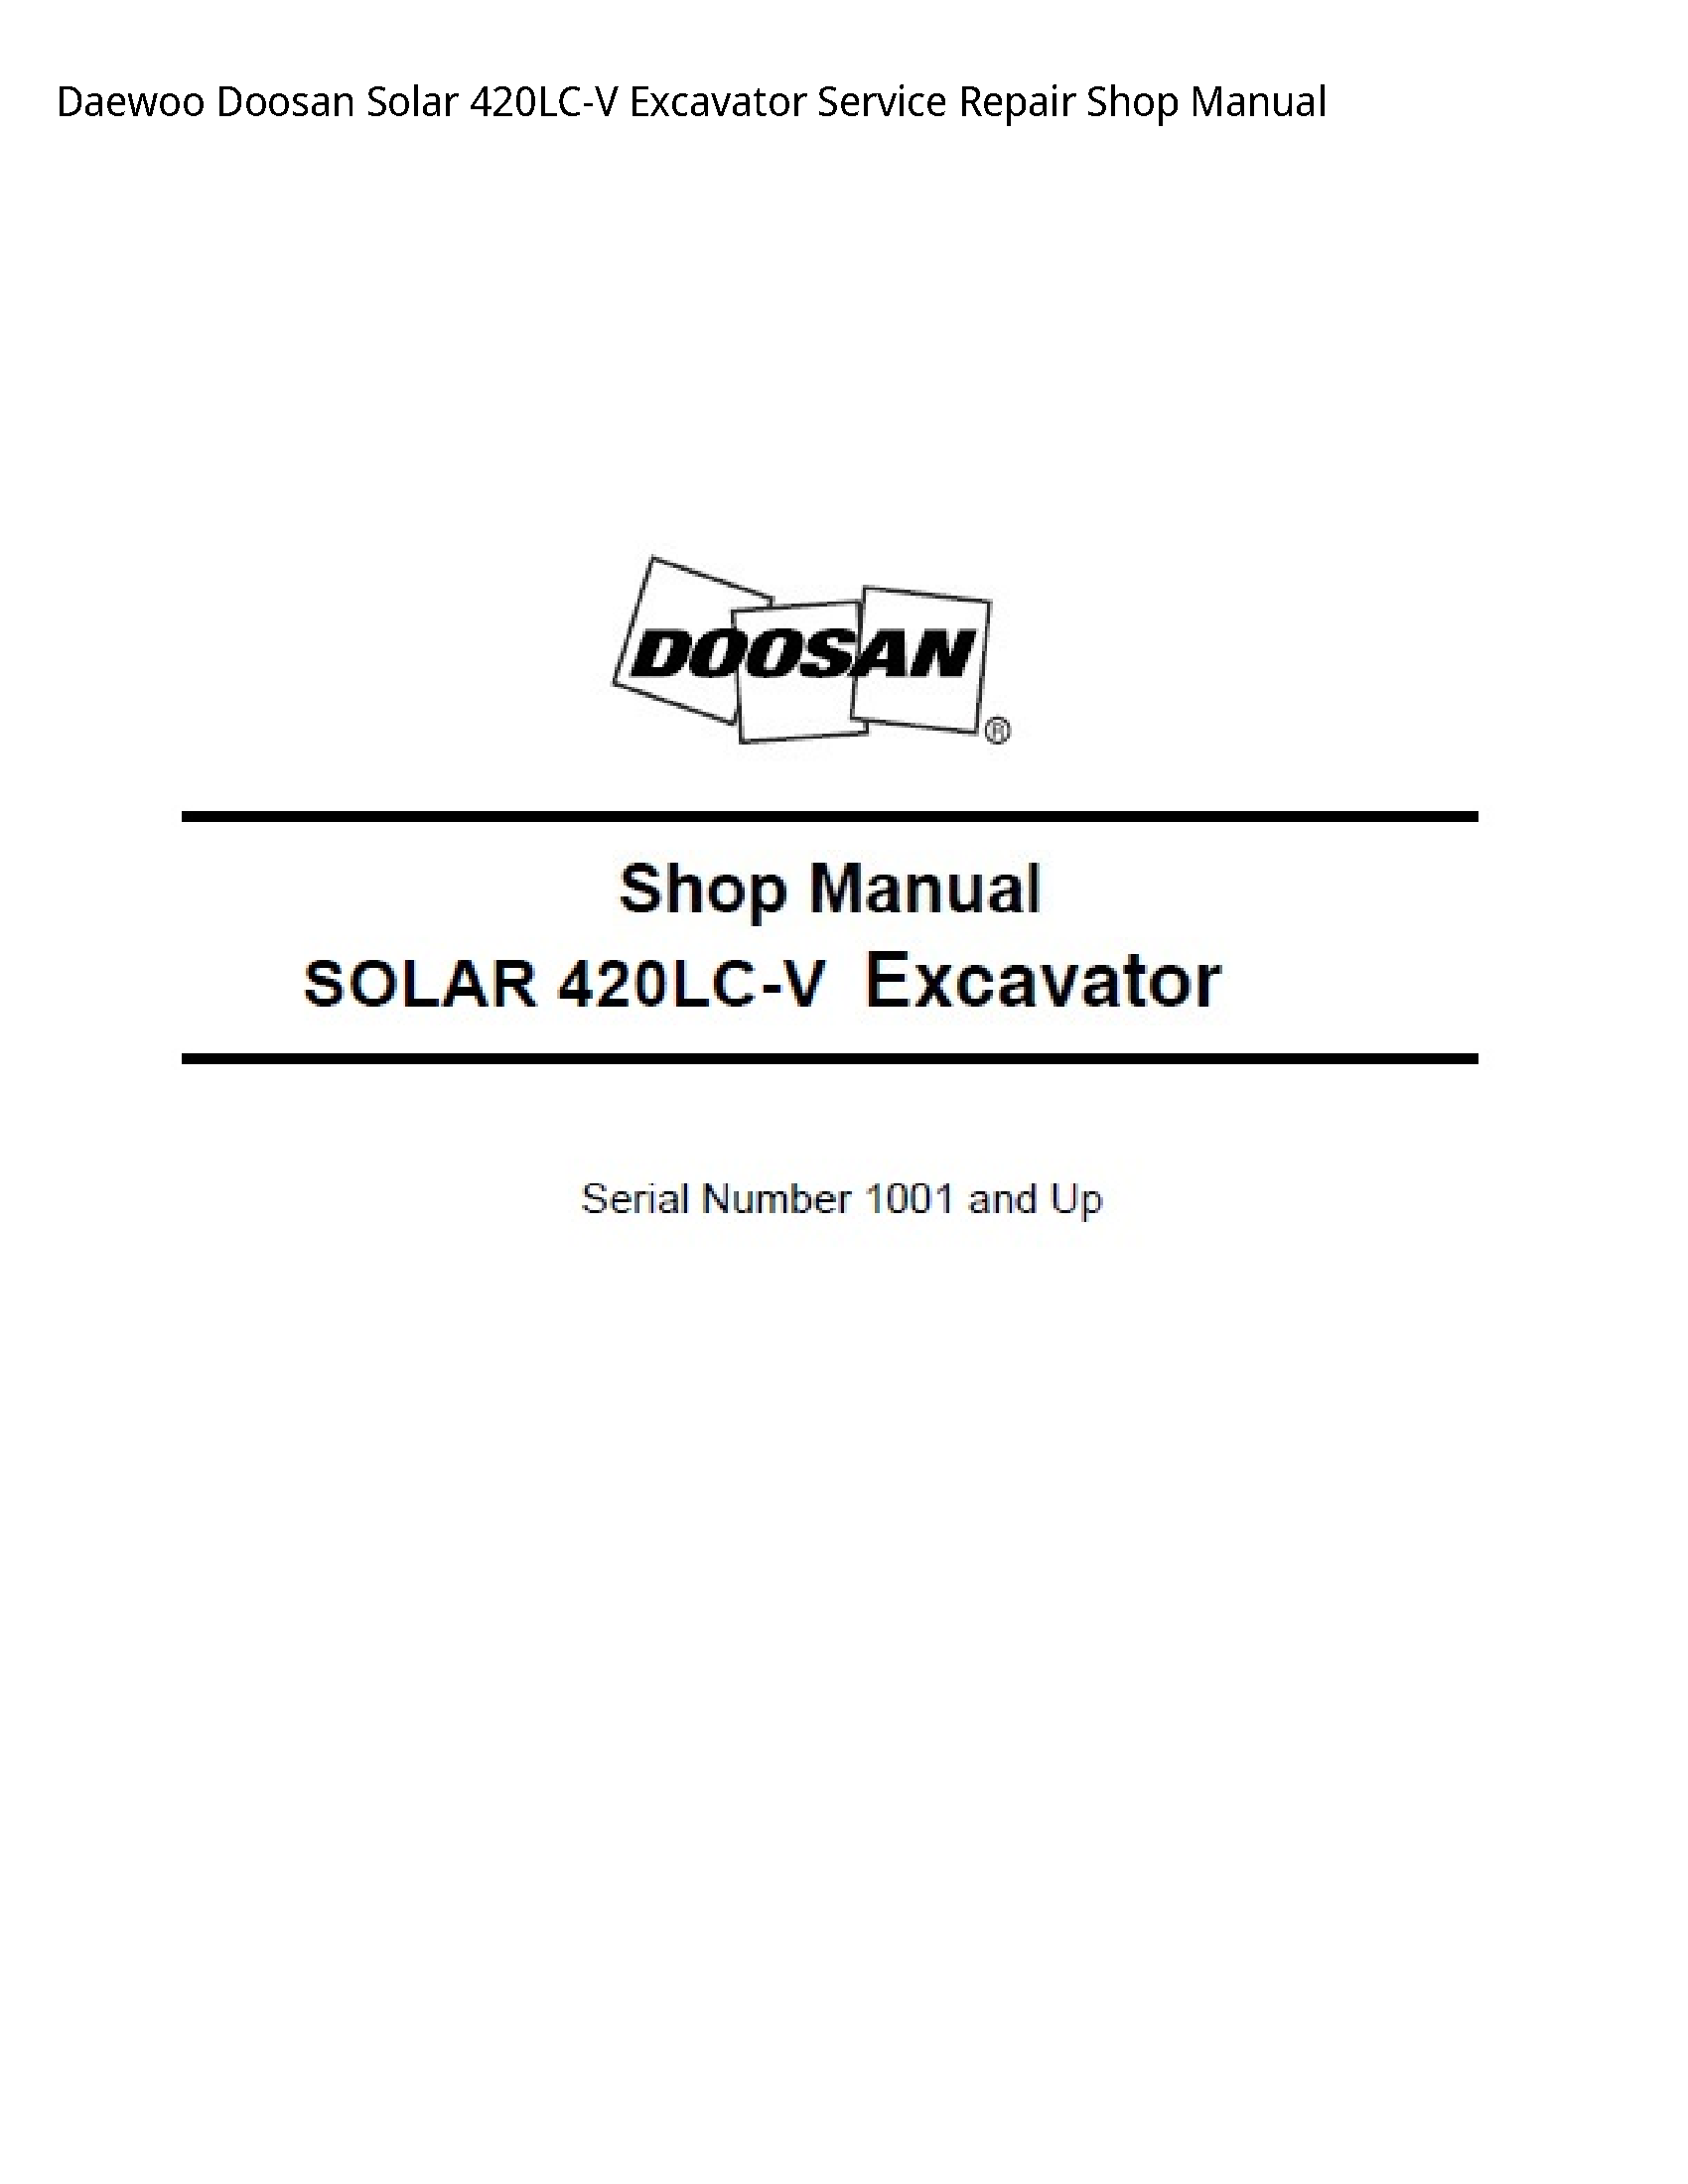 Daewoo Doosan 420LC-V Solar Excavator manual